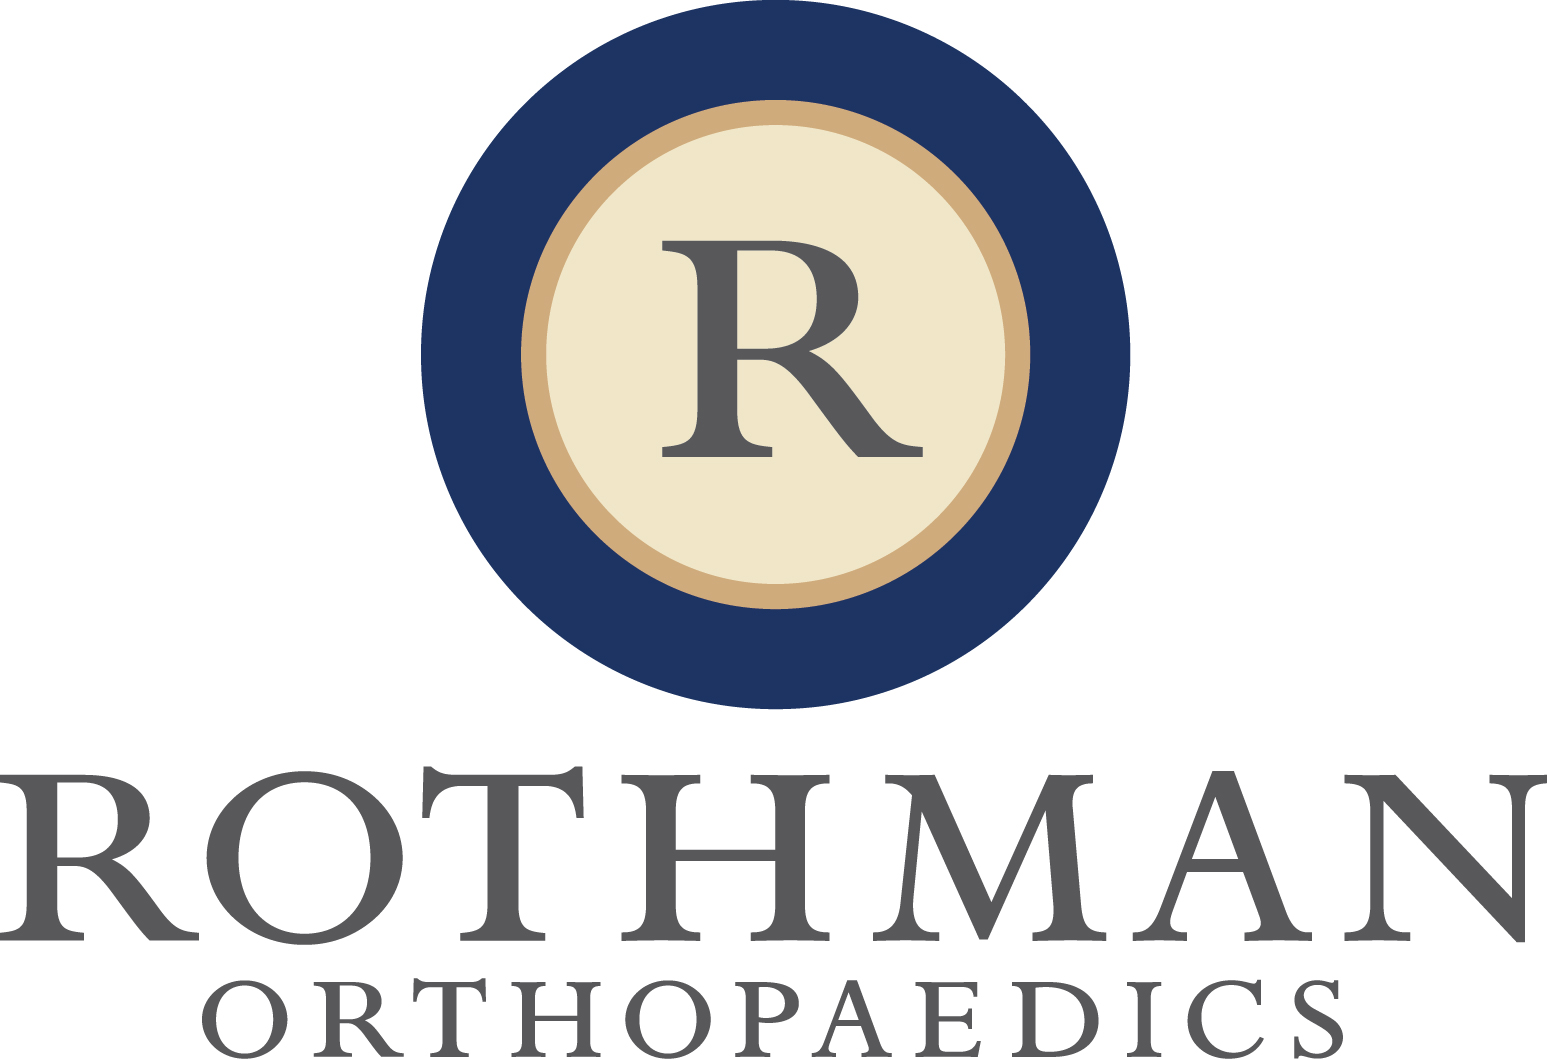 Rothman Orthopaedic Institute, Silver Corporate Sponsor